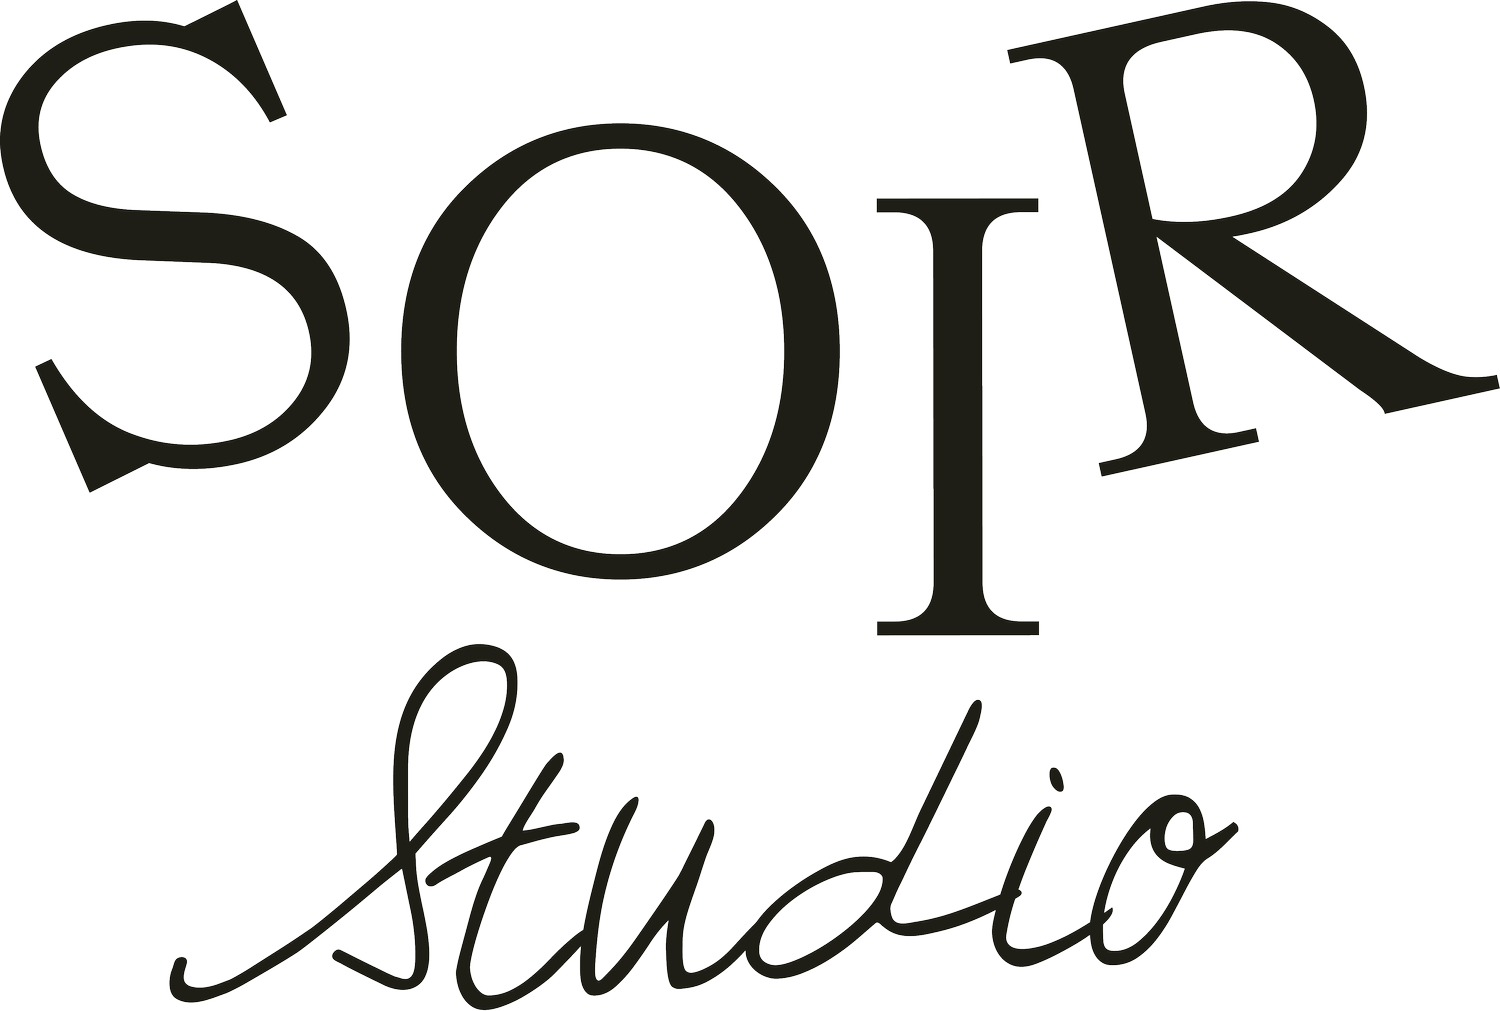 Soir Studio